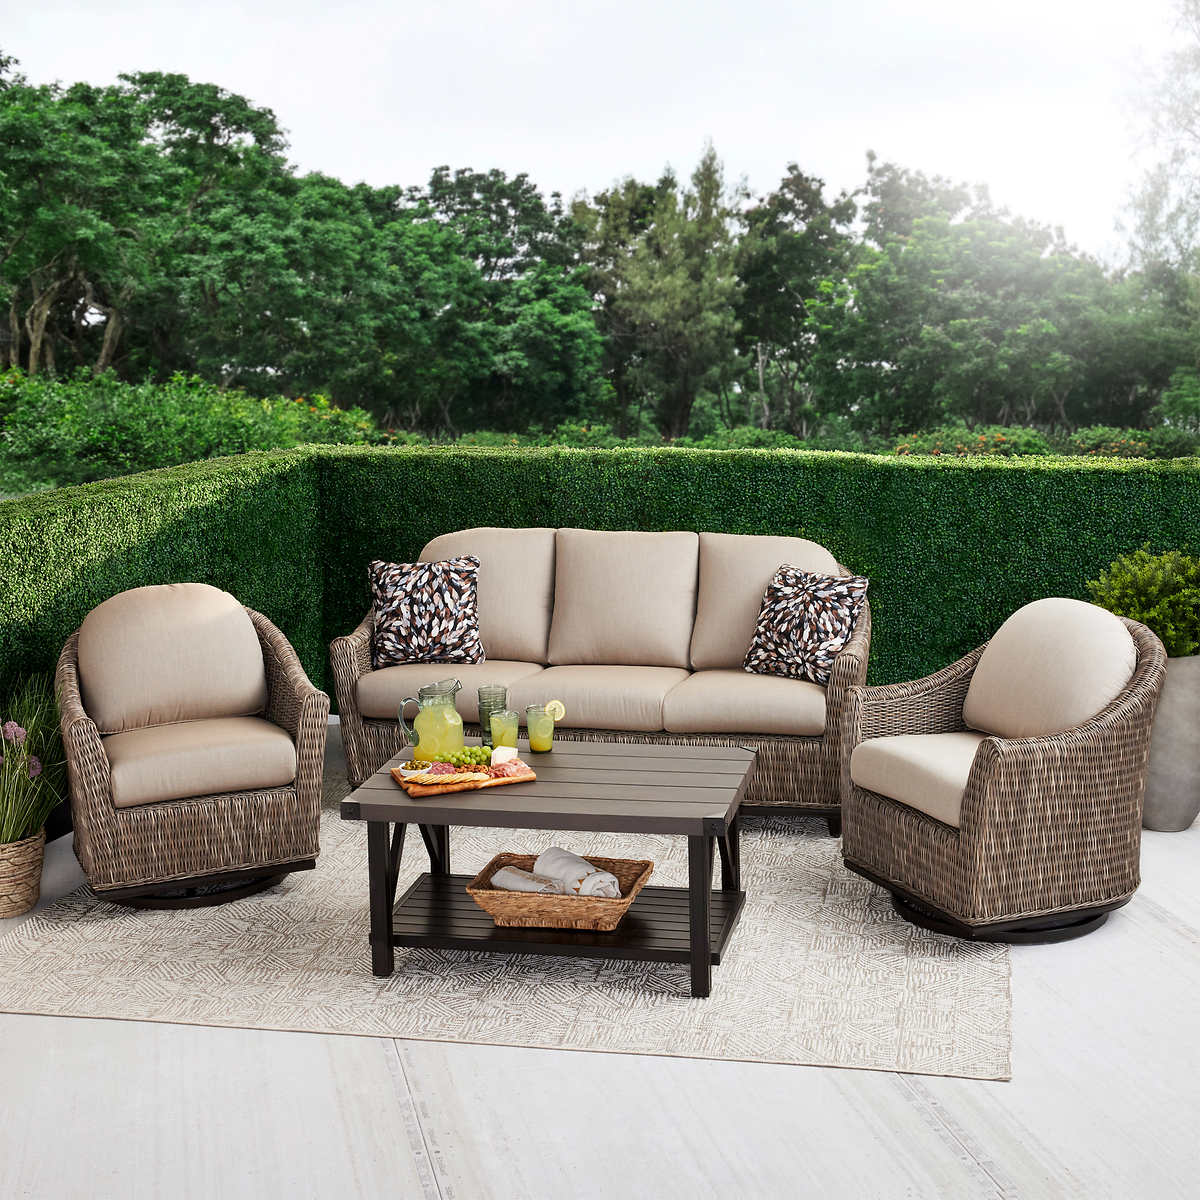 Costco - Agio Amelia 4-piece Outdoor Patio Seating Set - Retail $2699